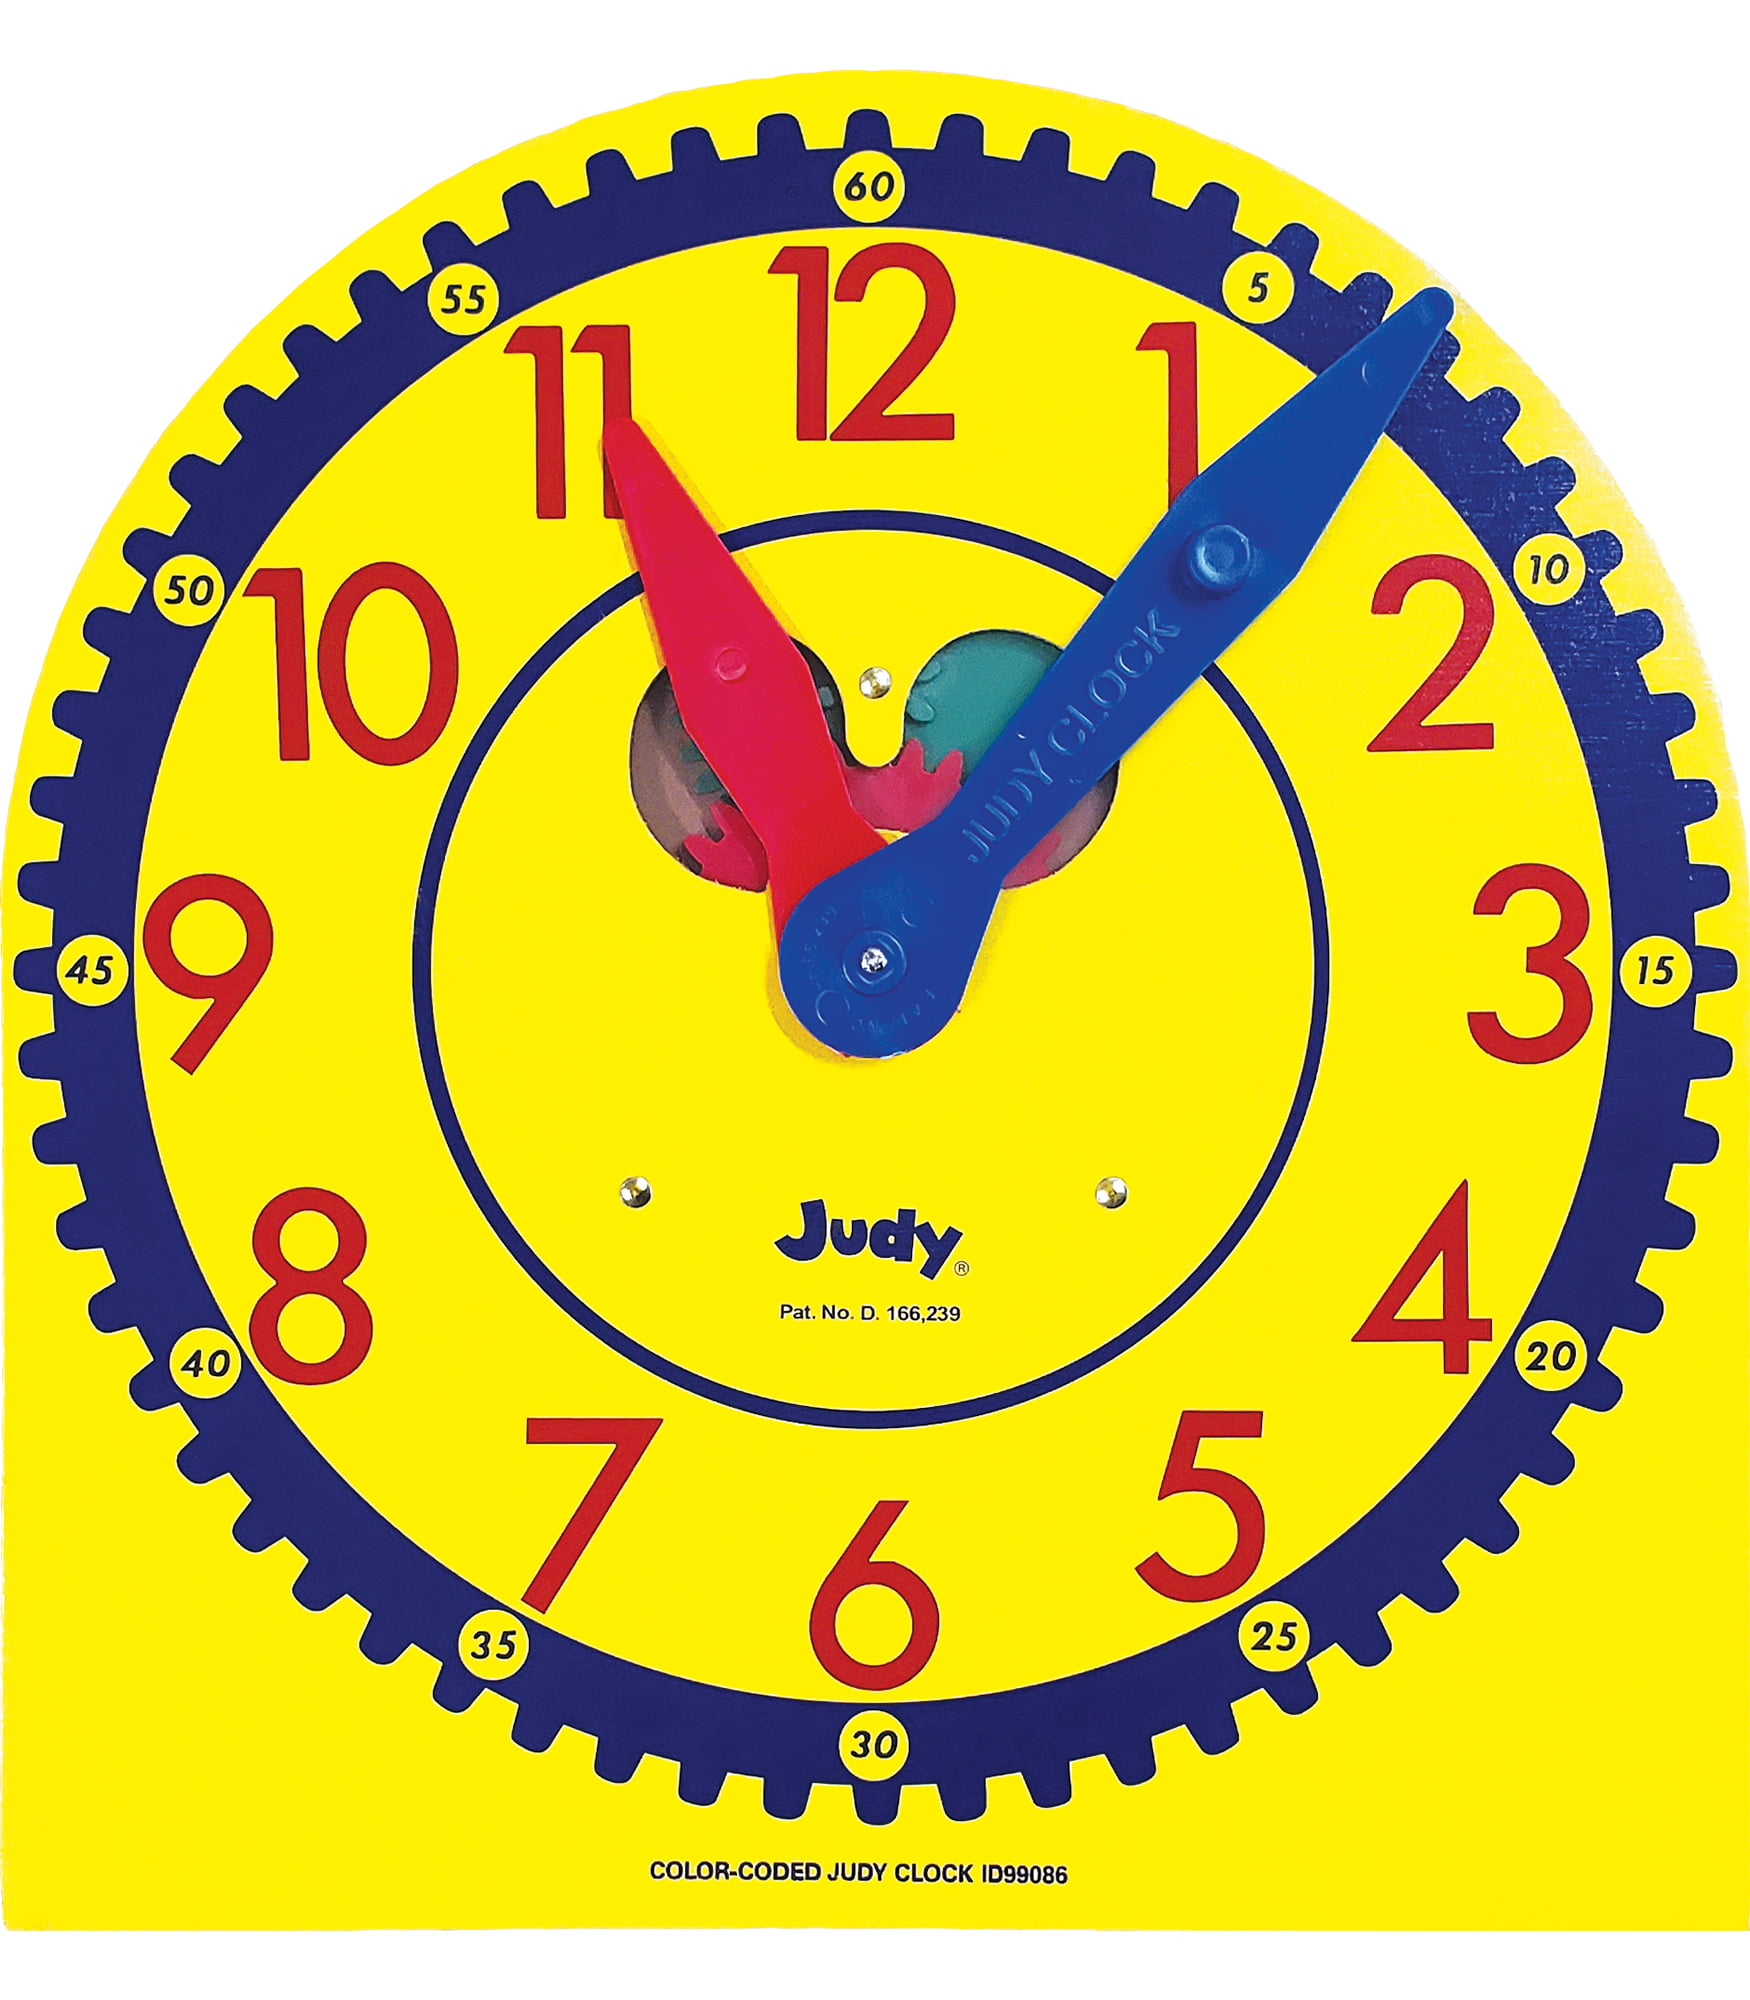 Learning Resources Big Time Student Clock 12 HR Ler2095 for sale online 